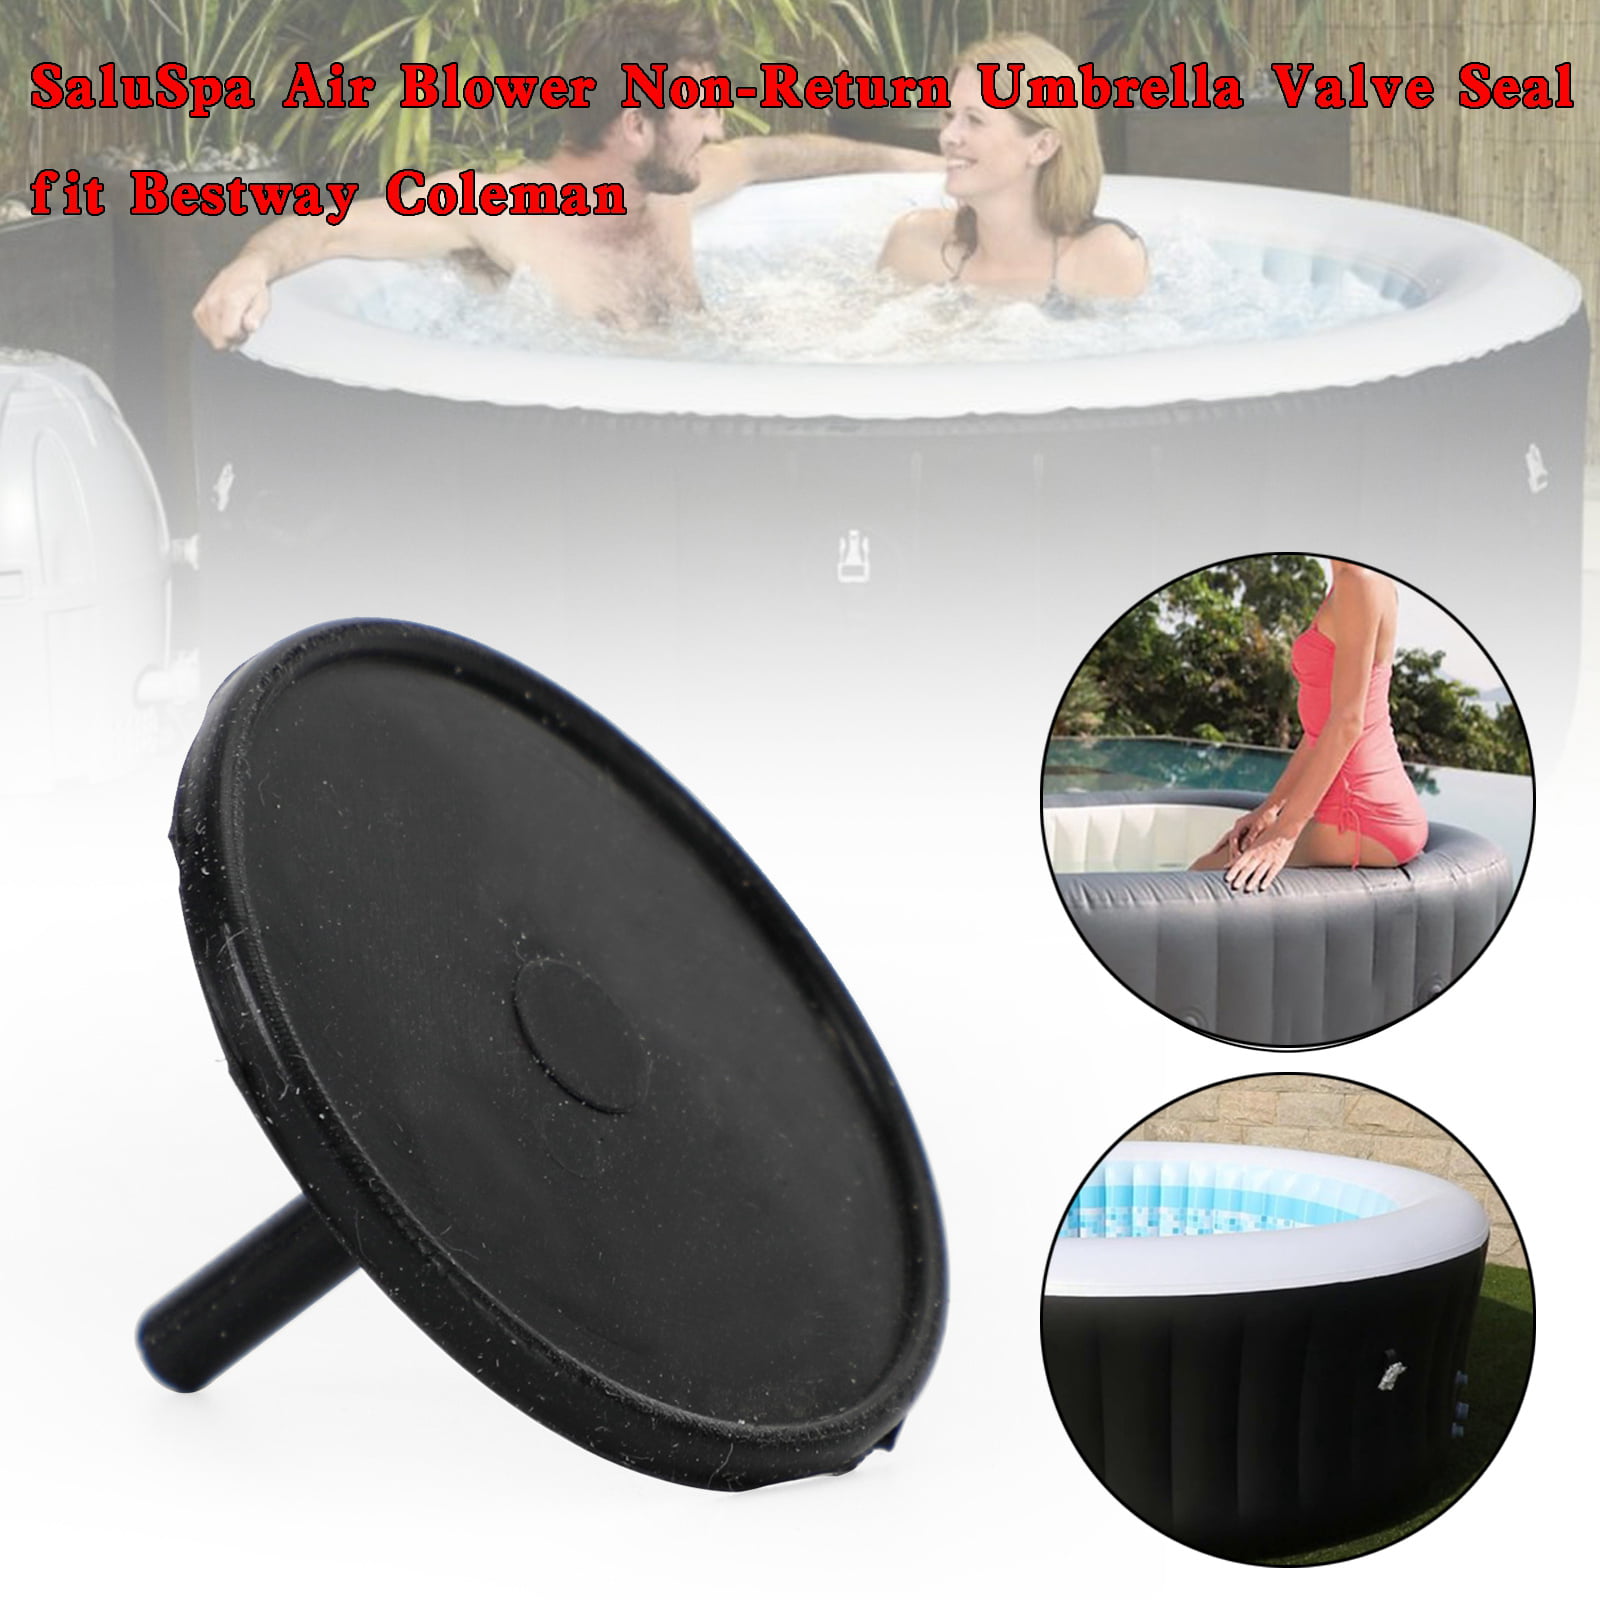 Bestway SaluSpa Air Blower Non-Return Umbrella Valve Seal fit Bestway Coleman A1 